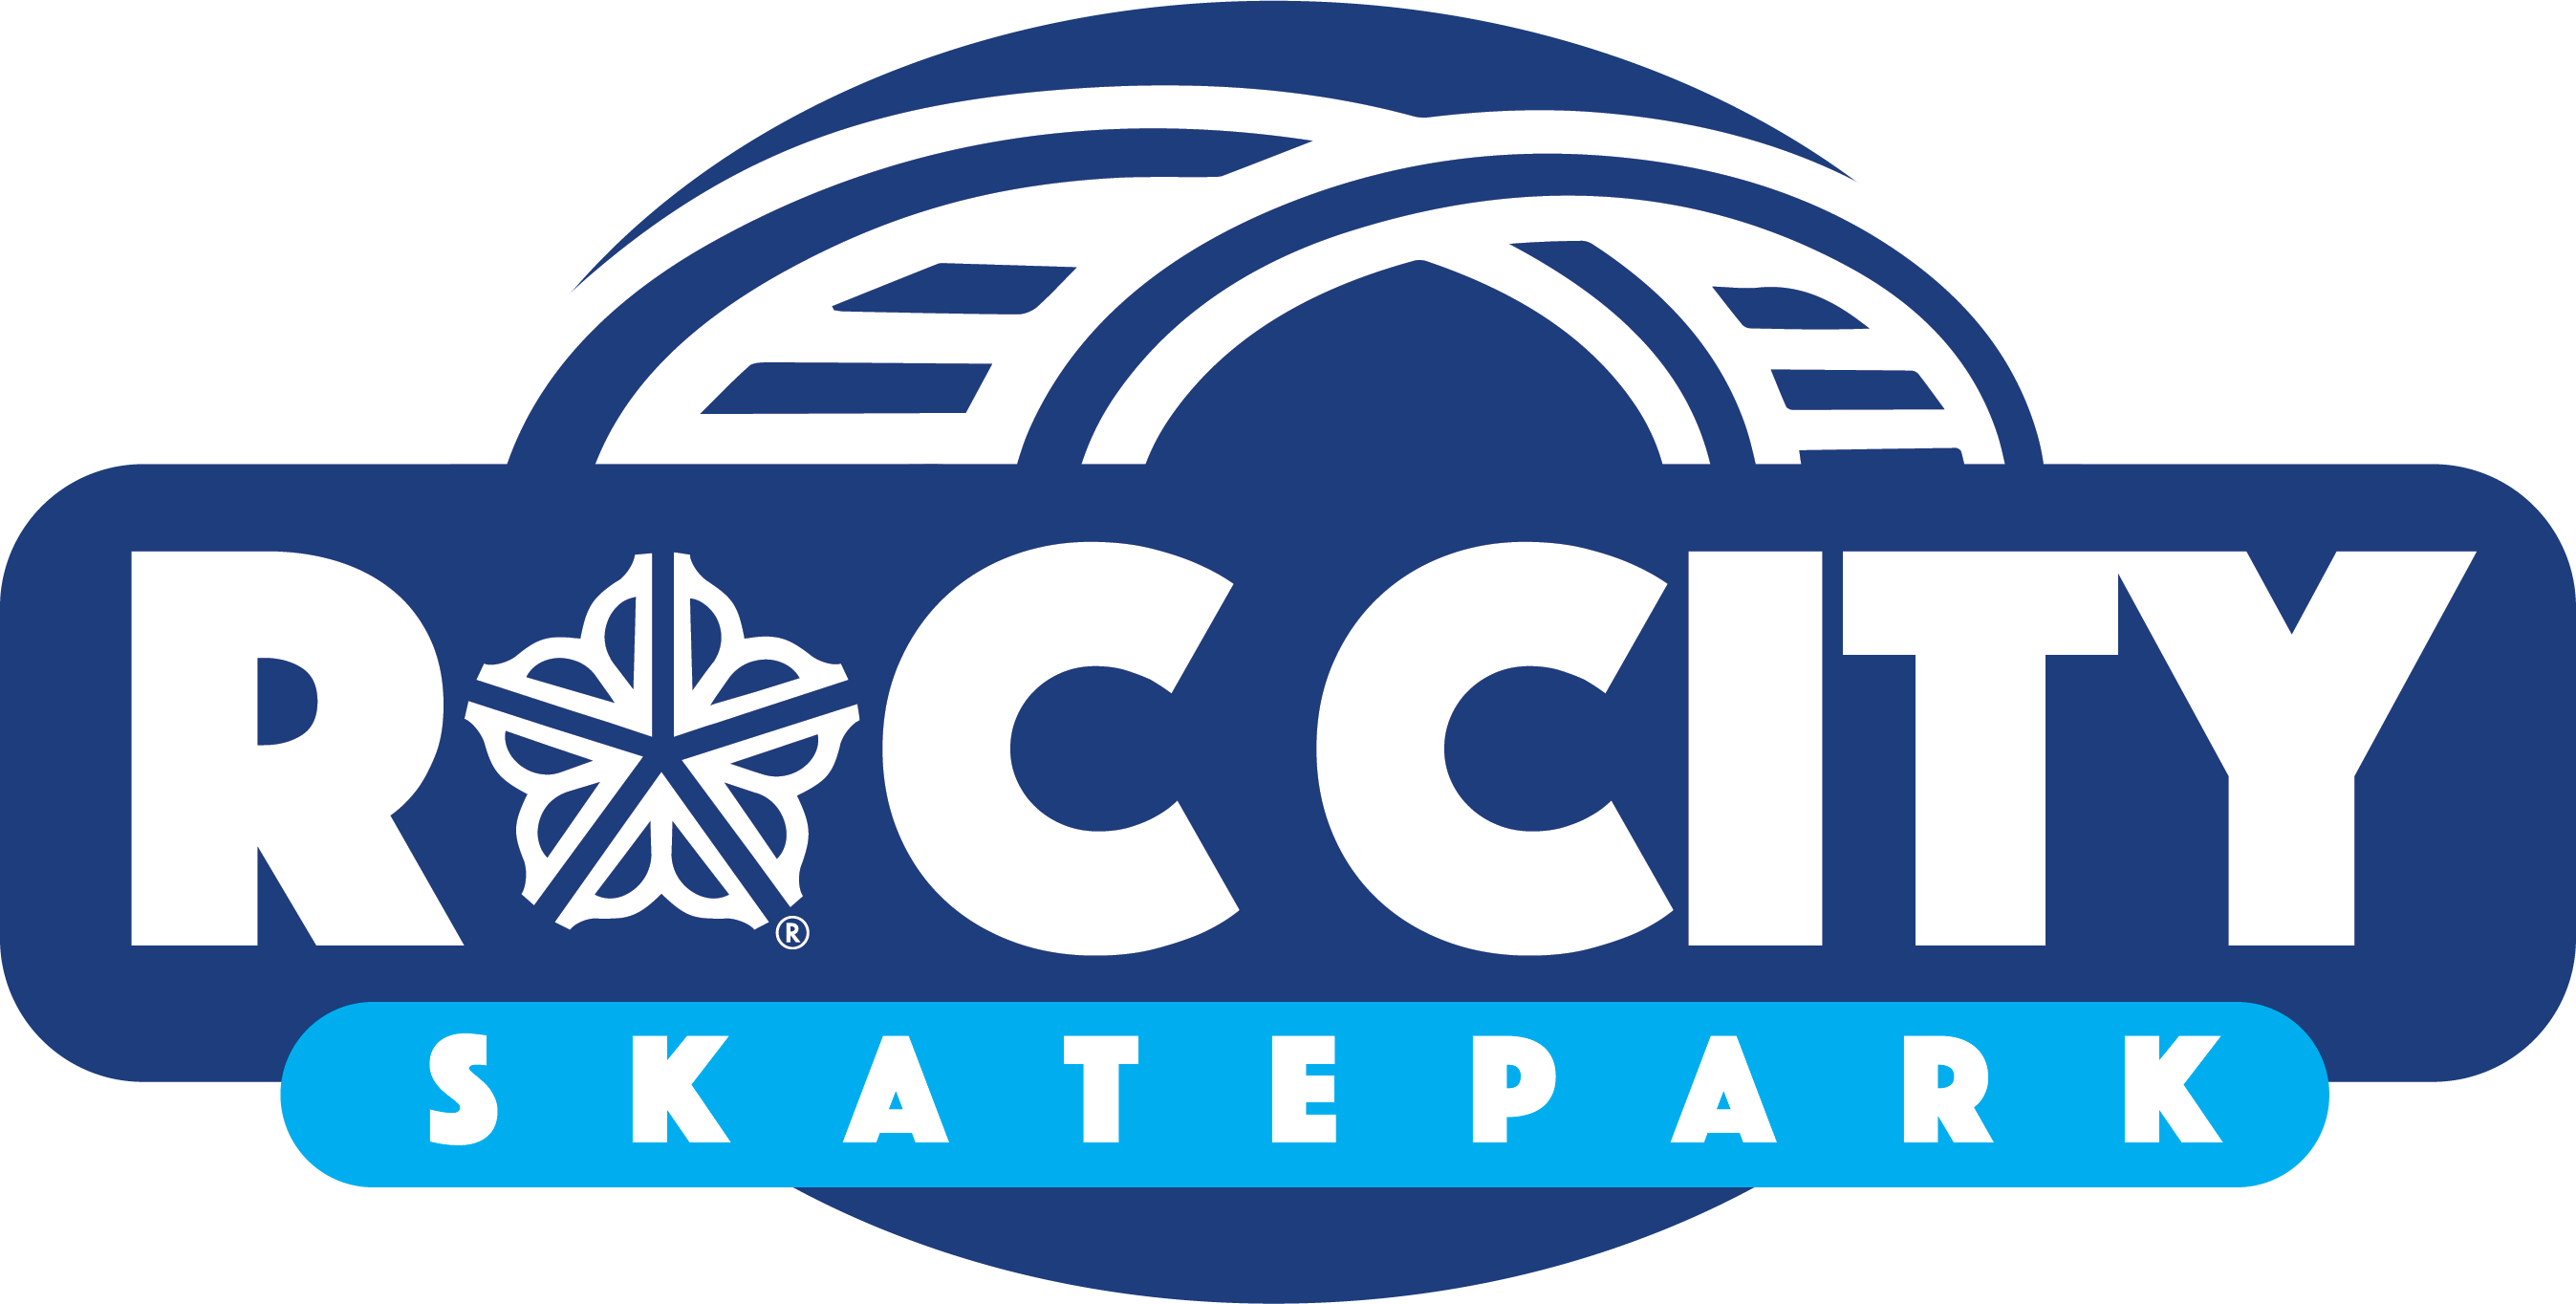 20 ROC Skate Park logo